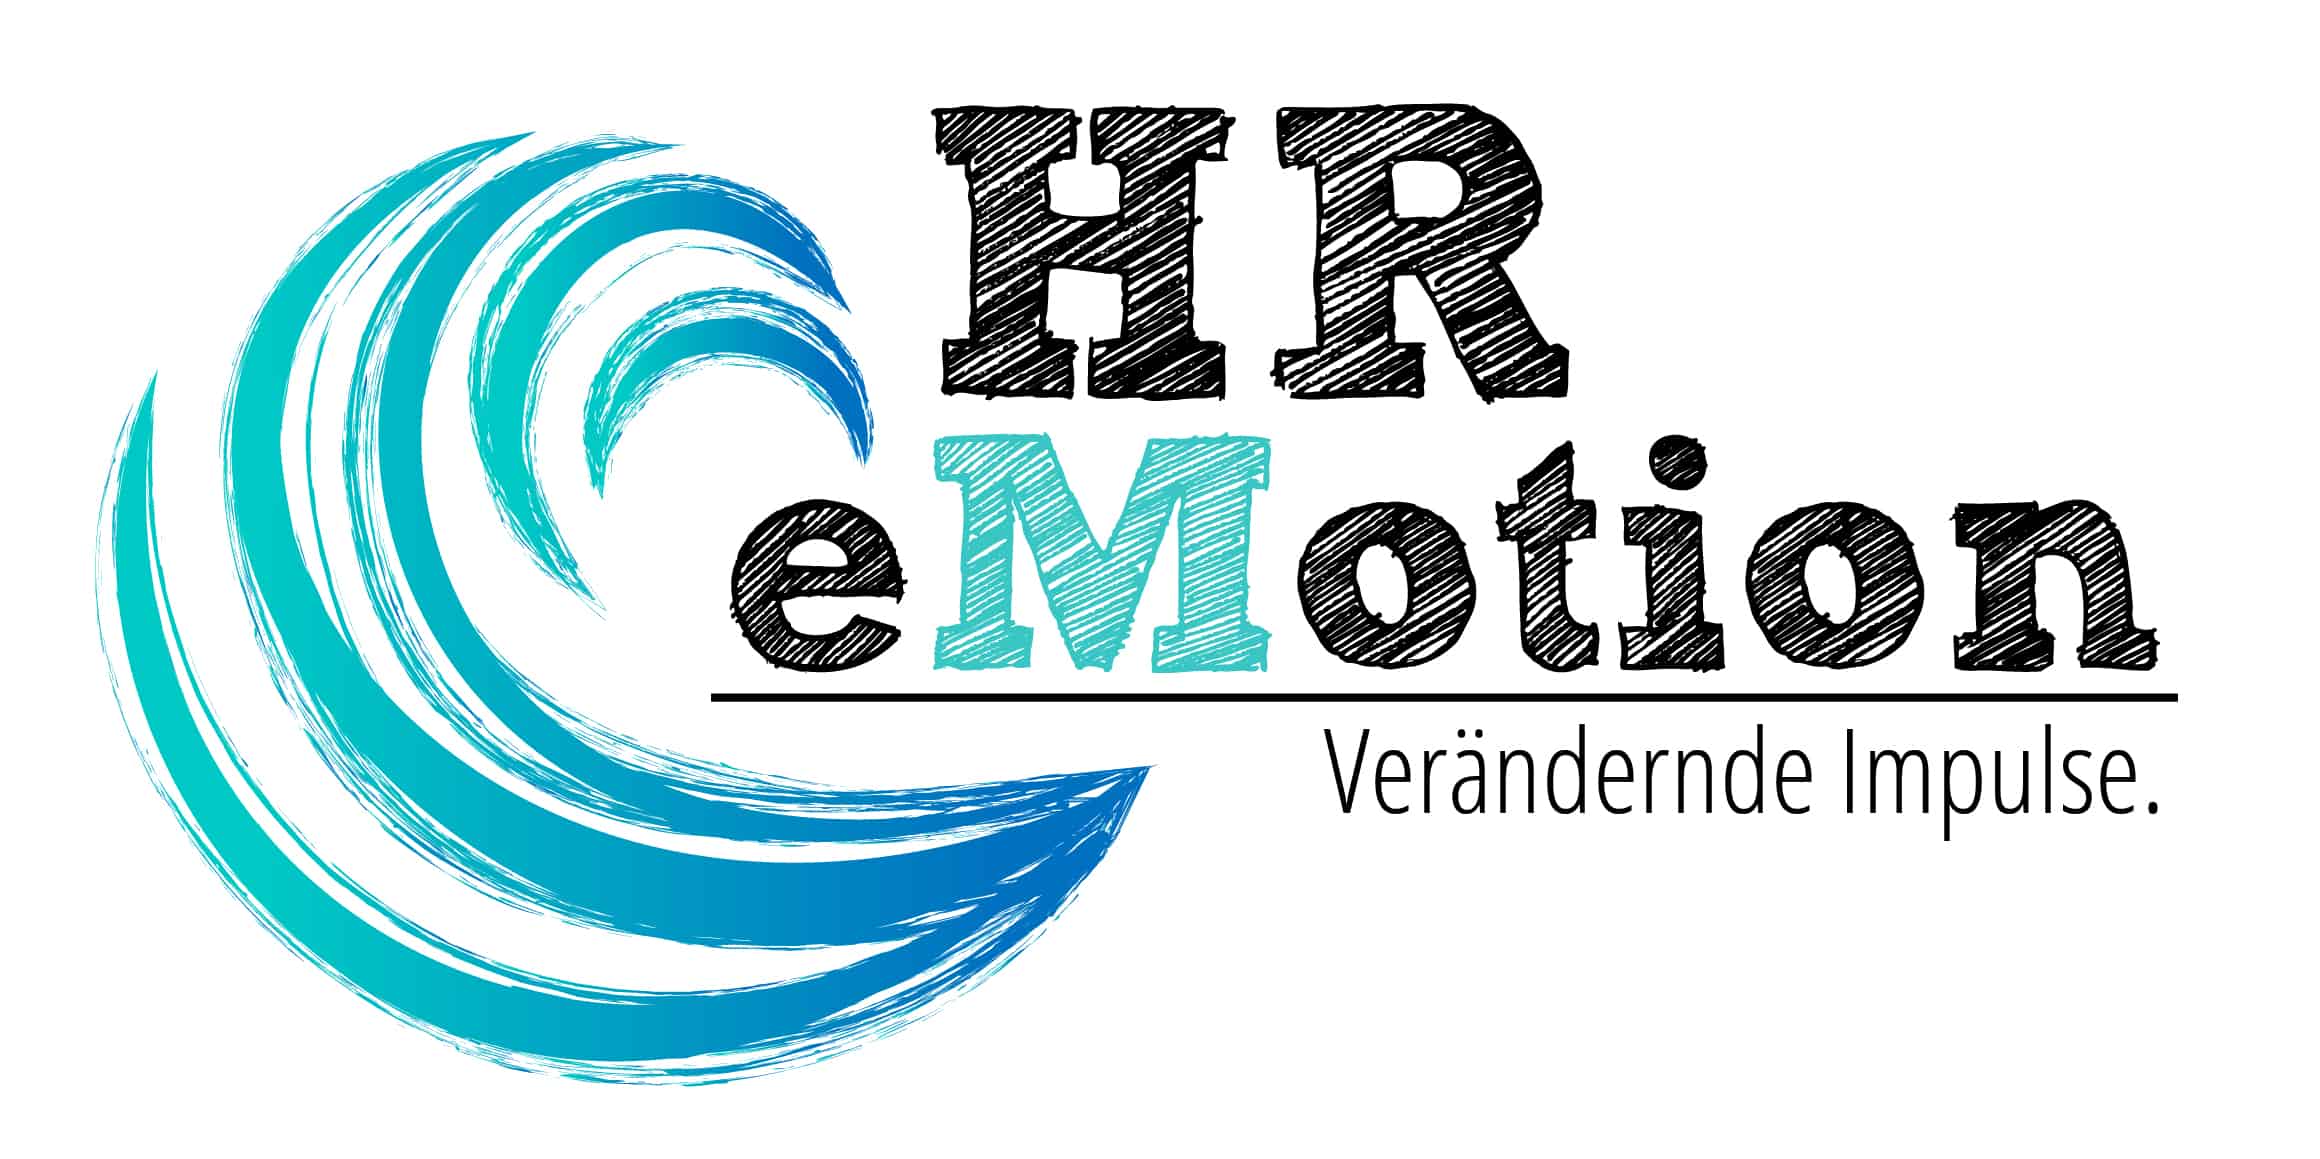 HR eMotion